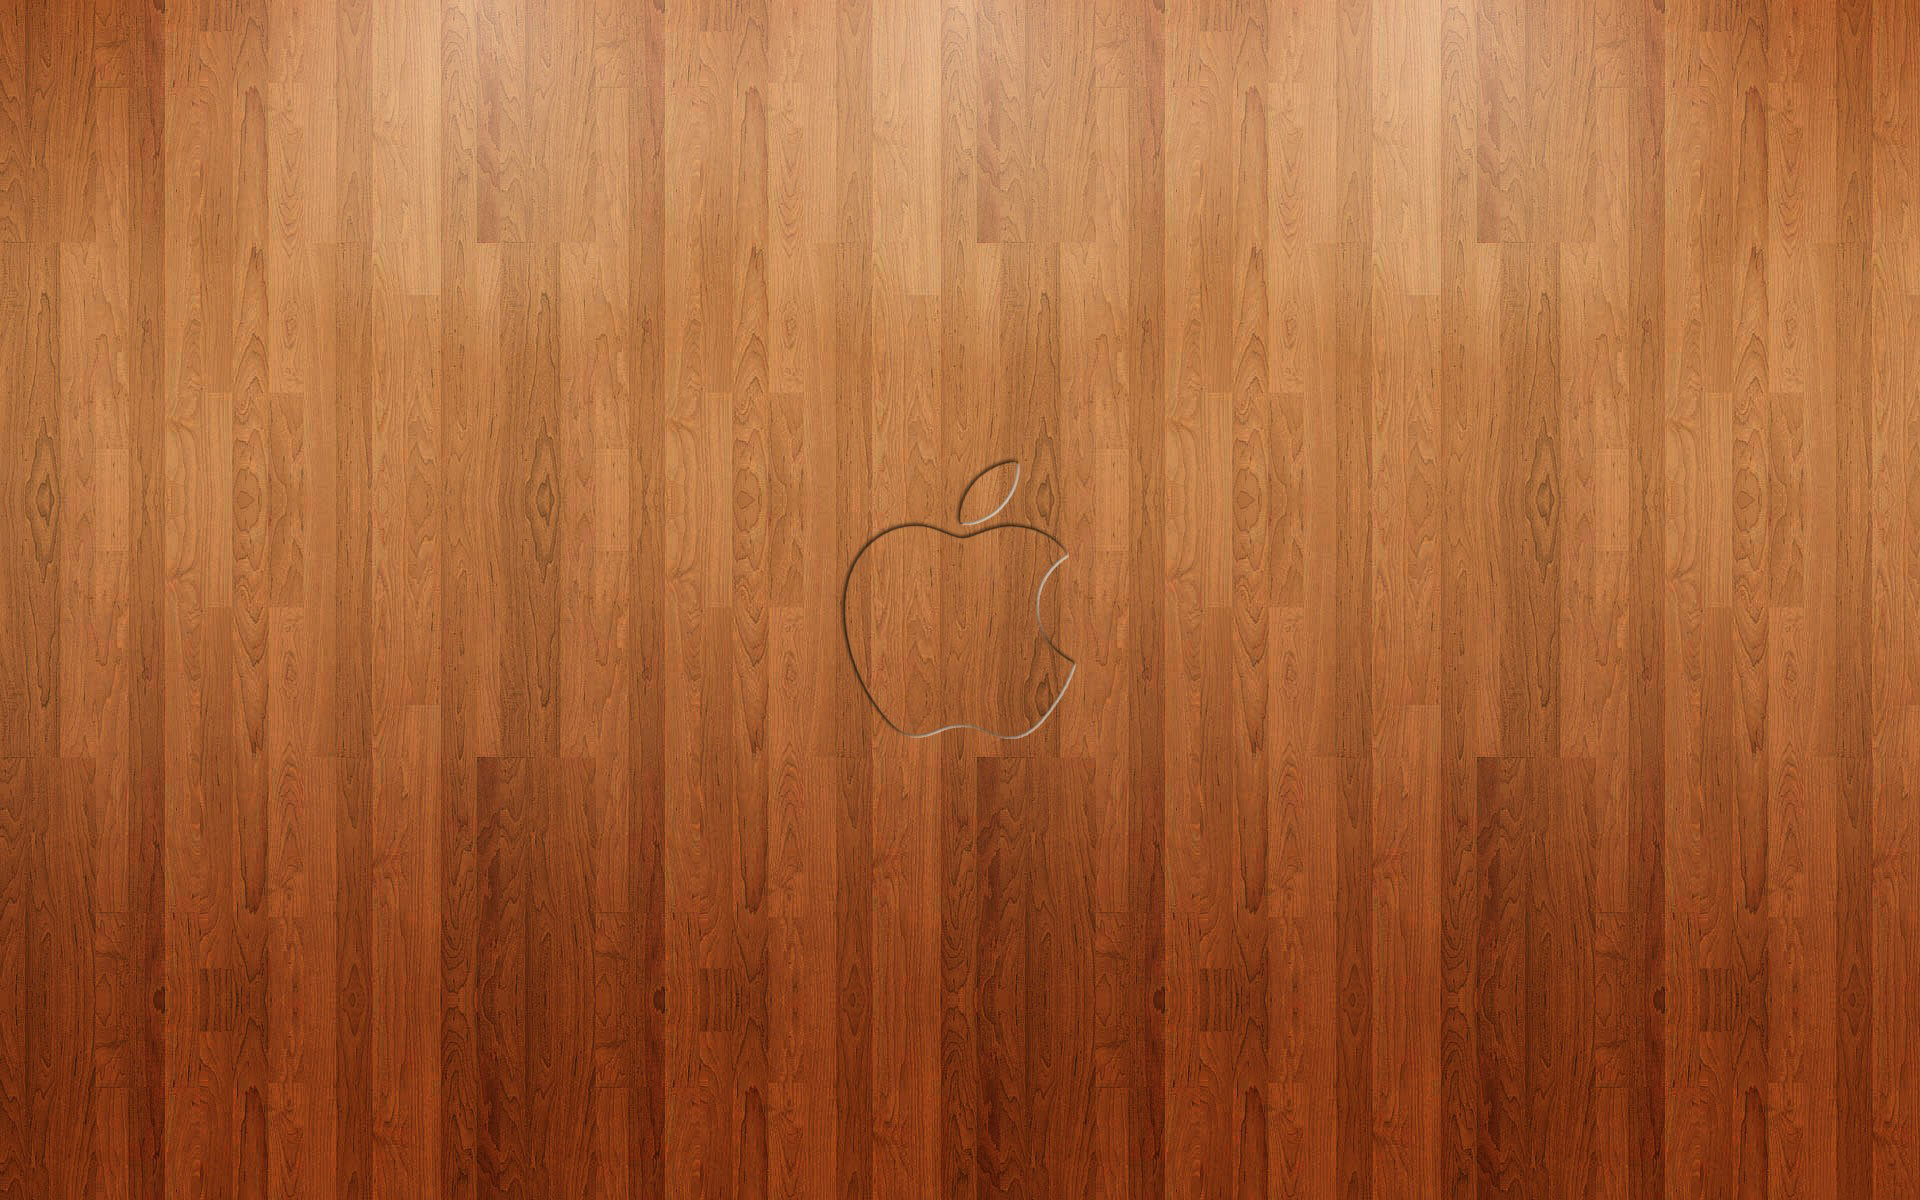 Apple MacBook HD Widescreen Wallpaper|Apple hd wallpapers#167